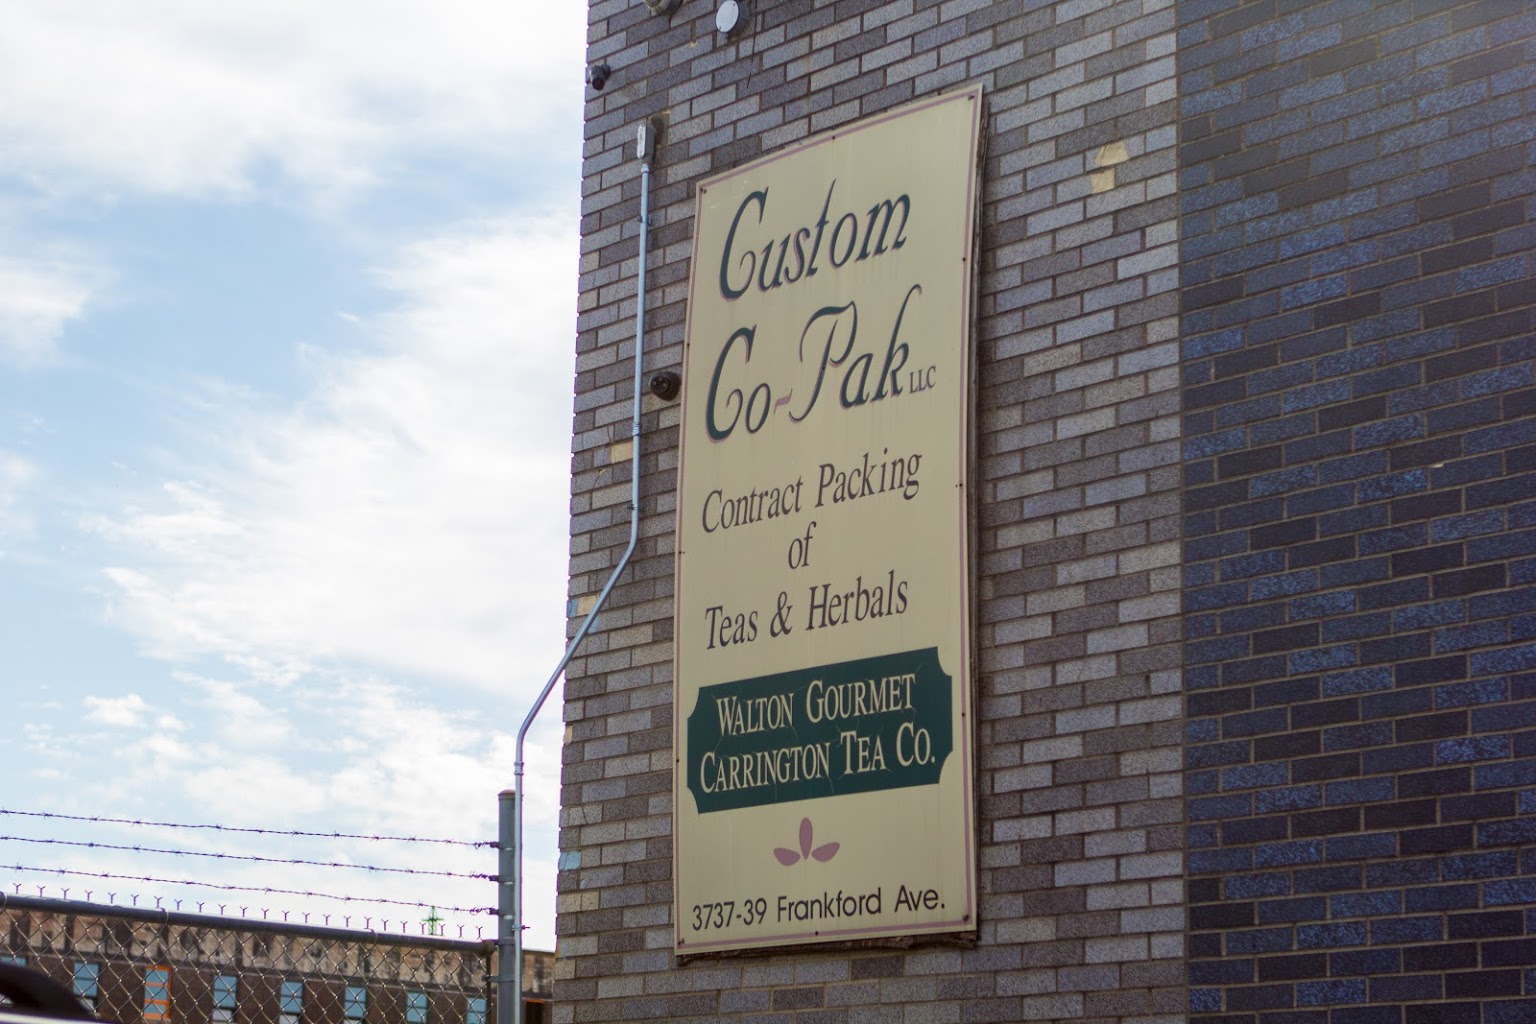 Custom Co-Pak - Private Label Tea Bag Manufacturers in Philadelphia, PA